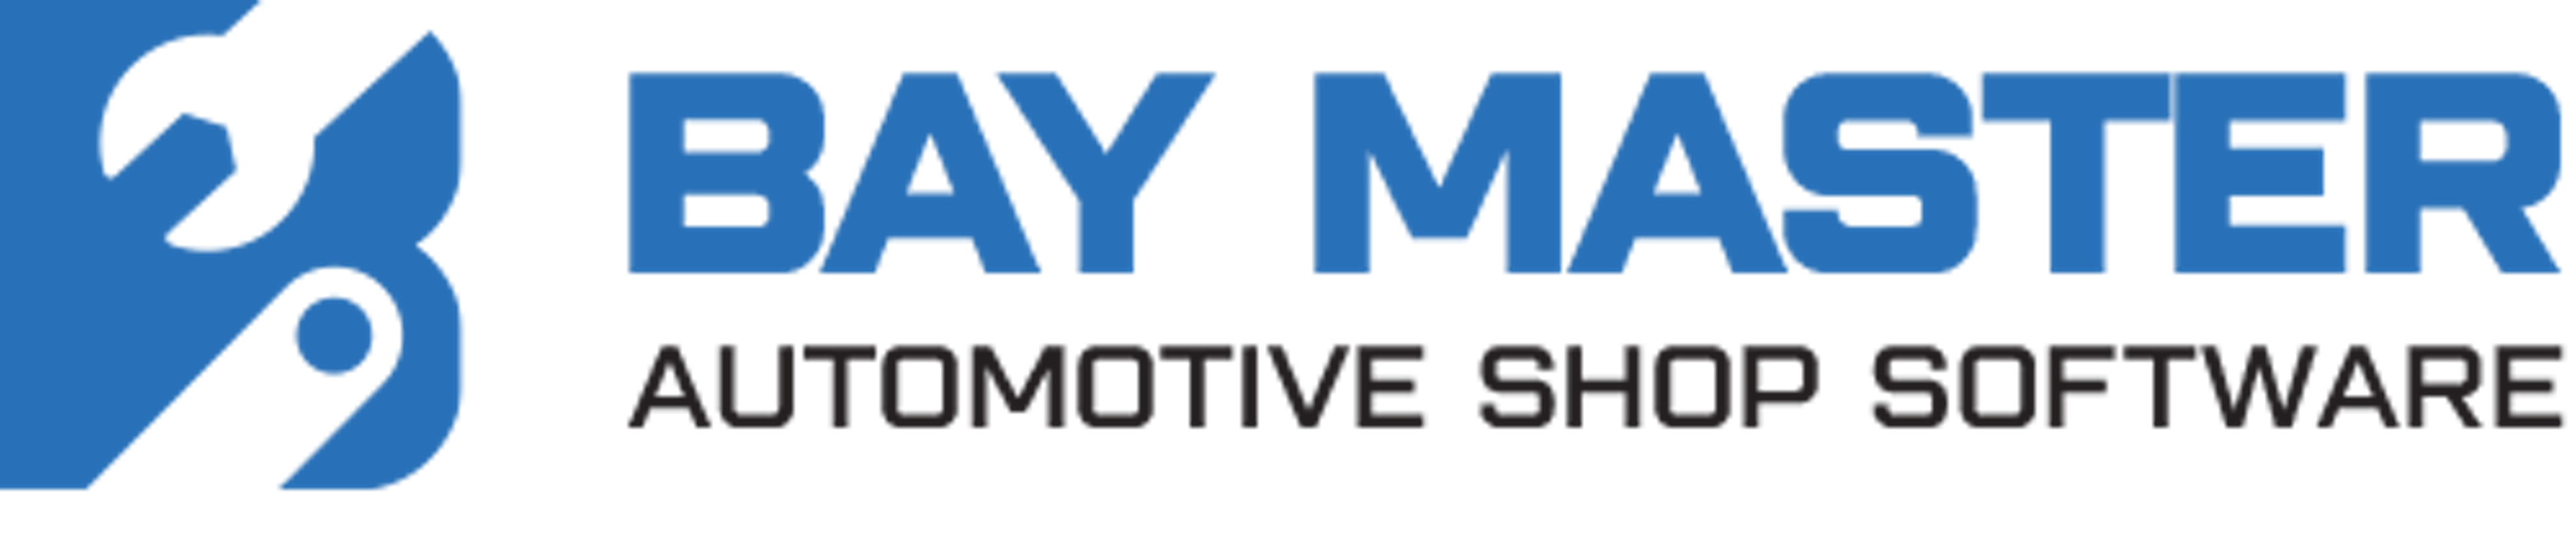 Bay-masteR Logo